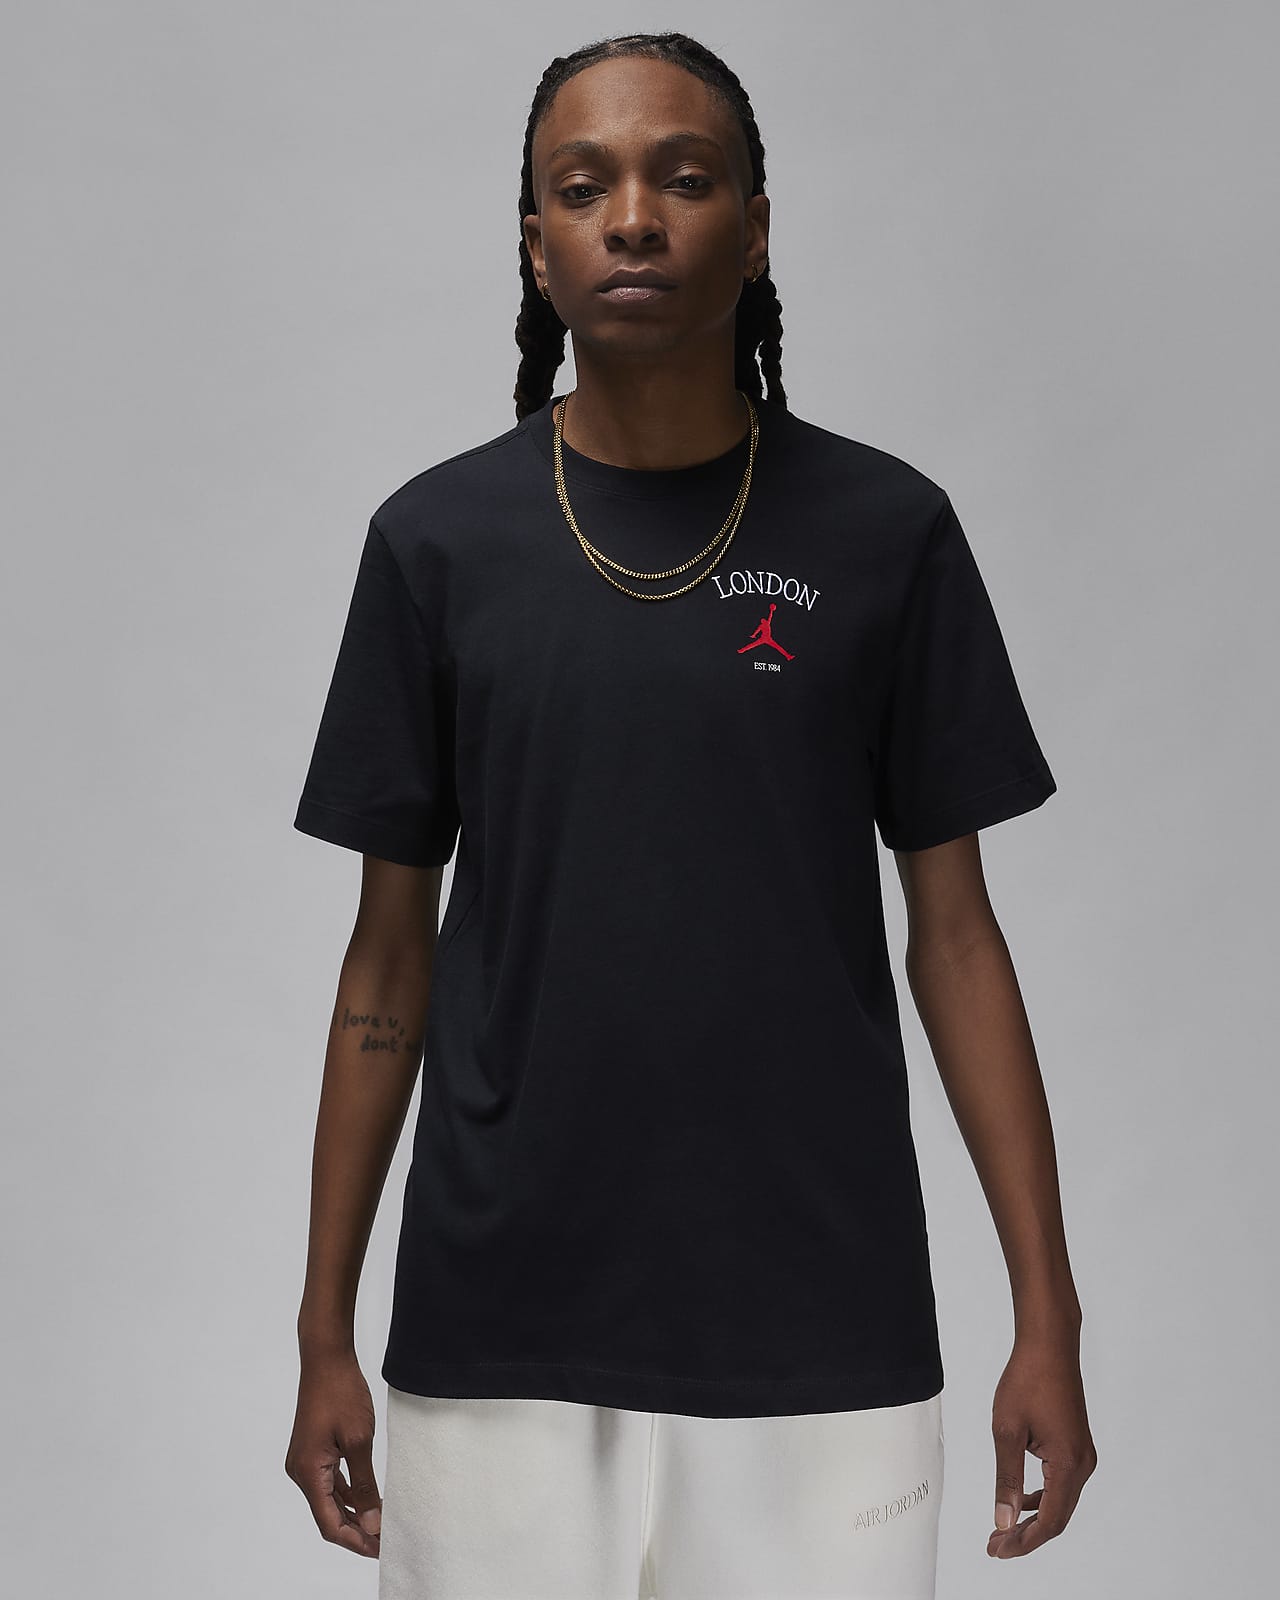 Jordan London Herren-T-Shirt